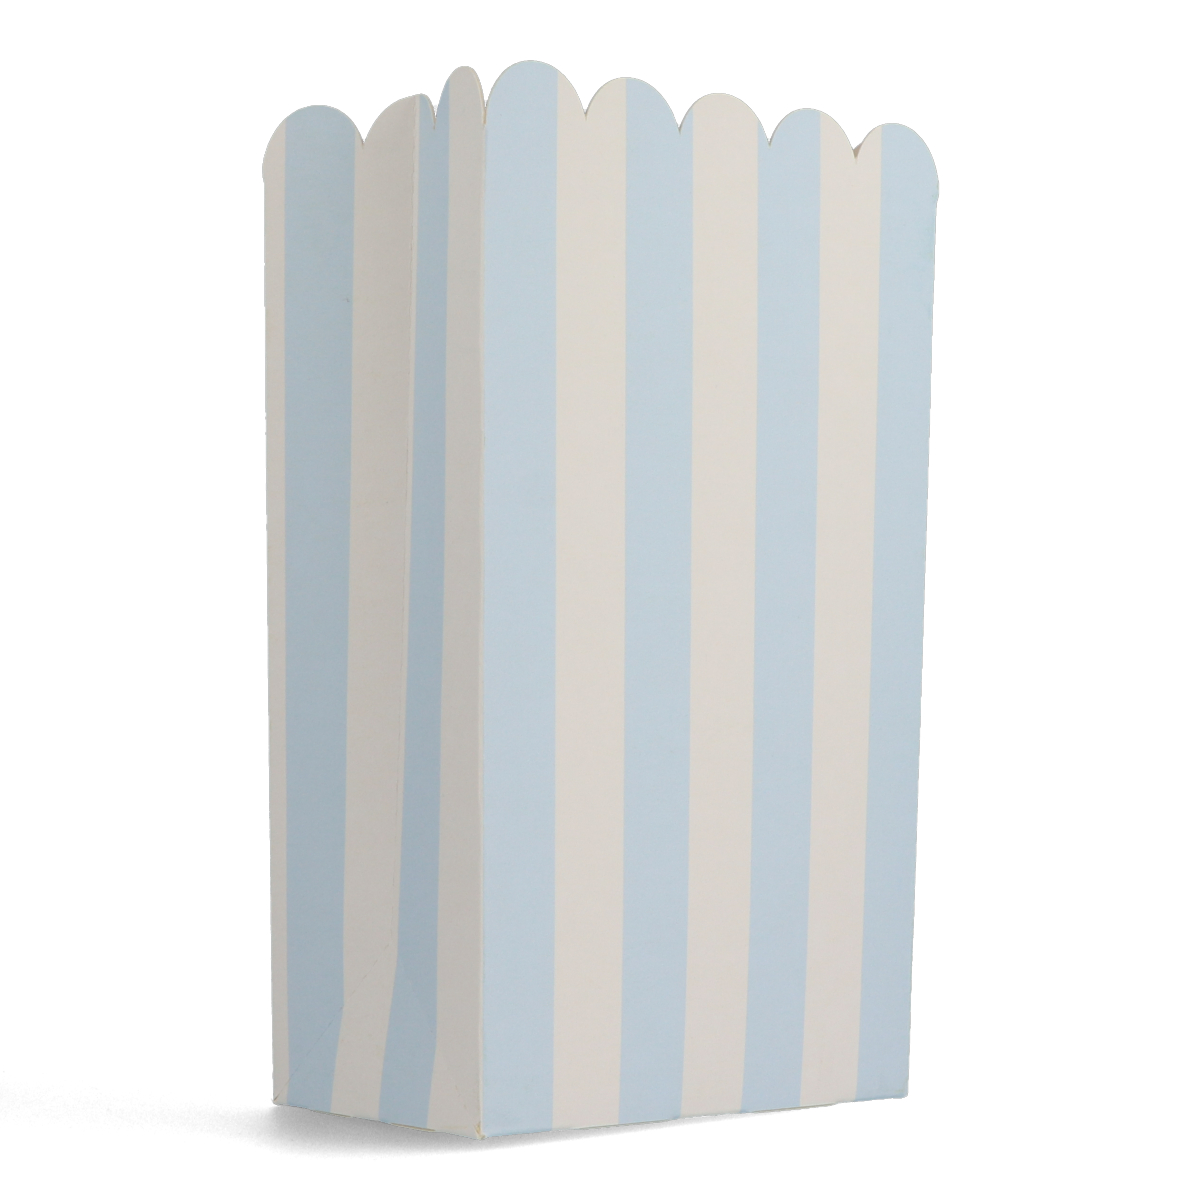 Popcorn bag with light blue striped print